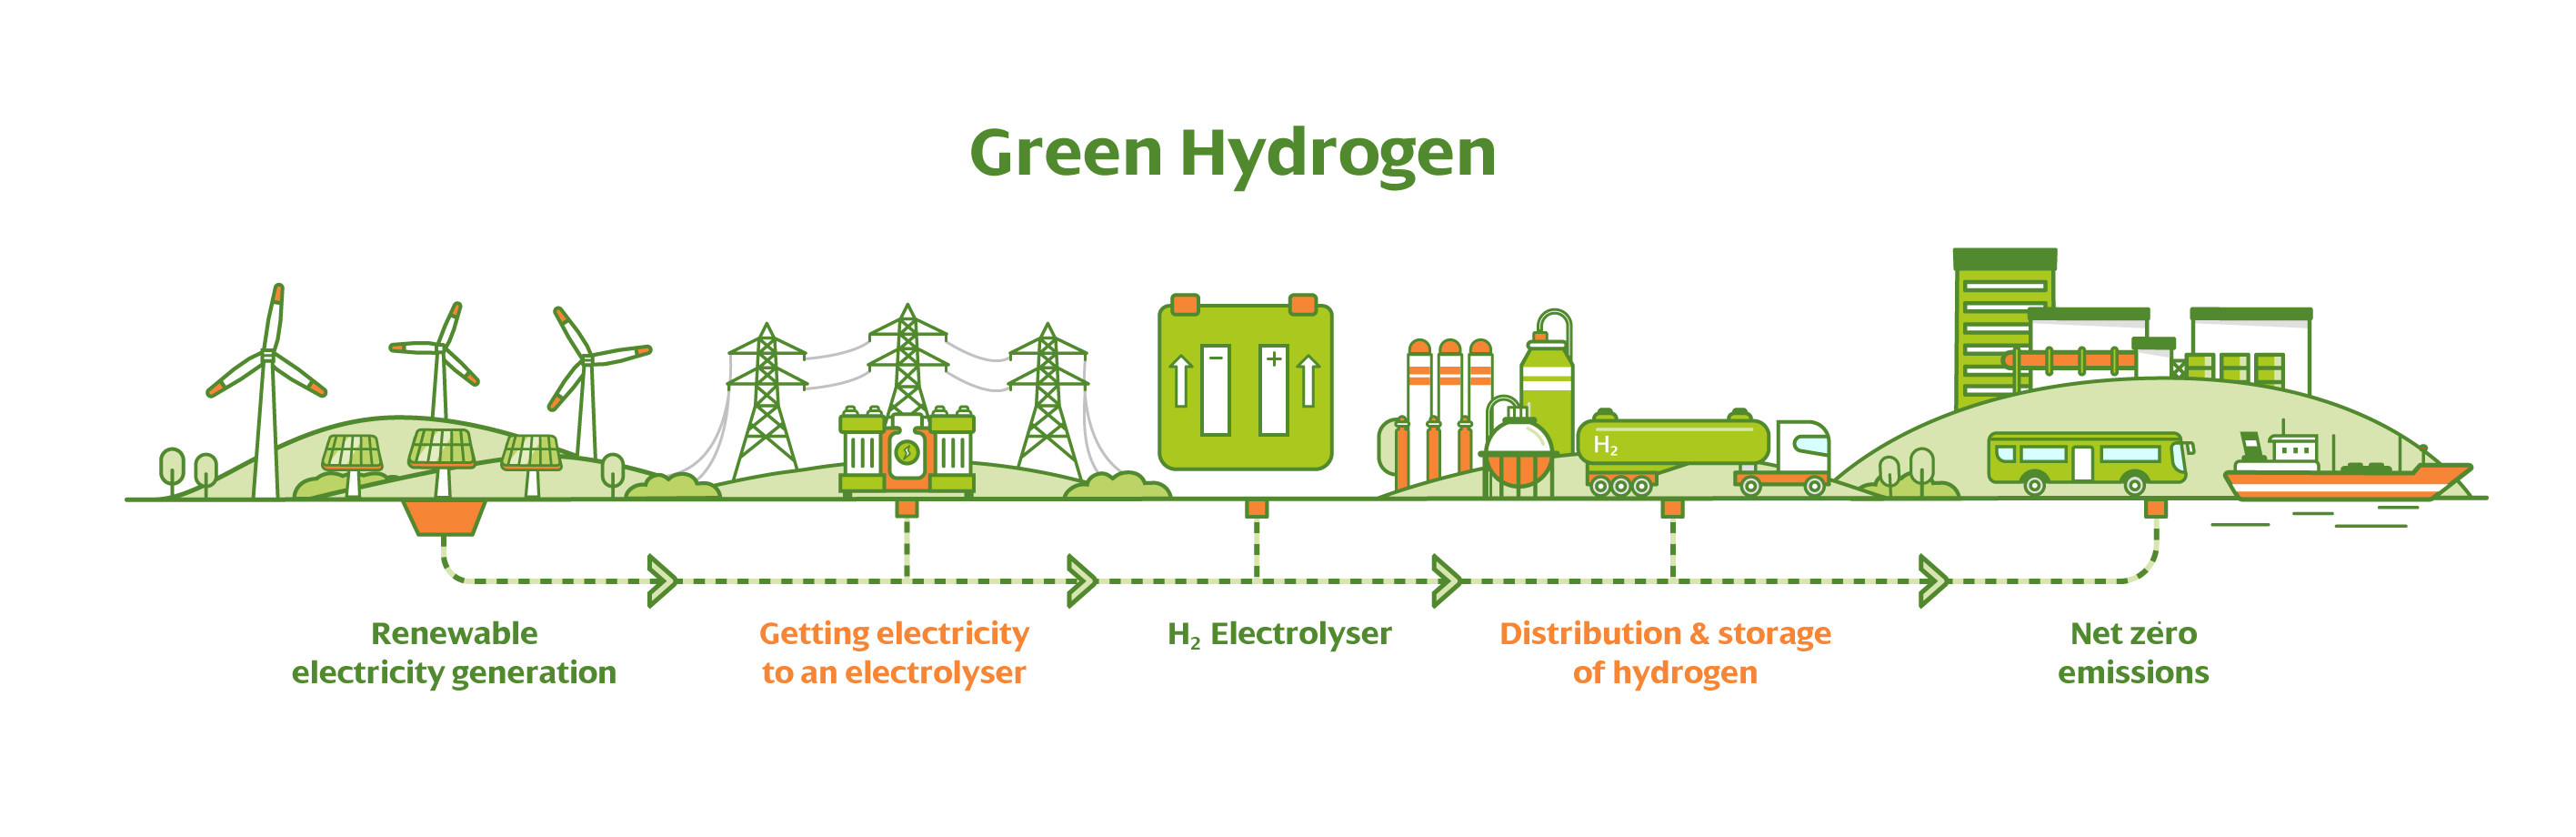 Is ScottishPower Scaling up Green Hydrogen?